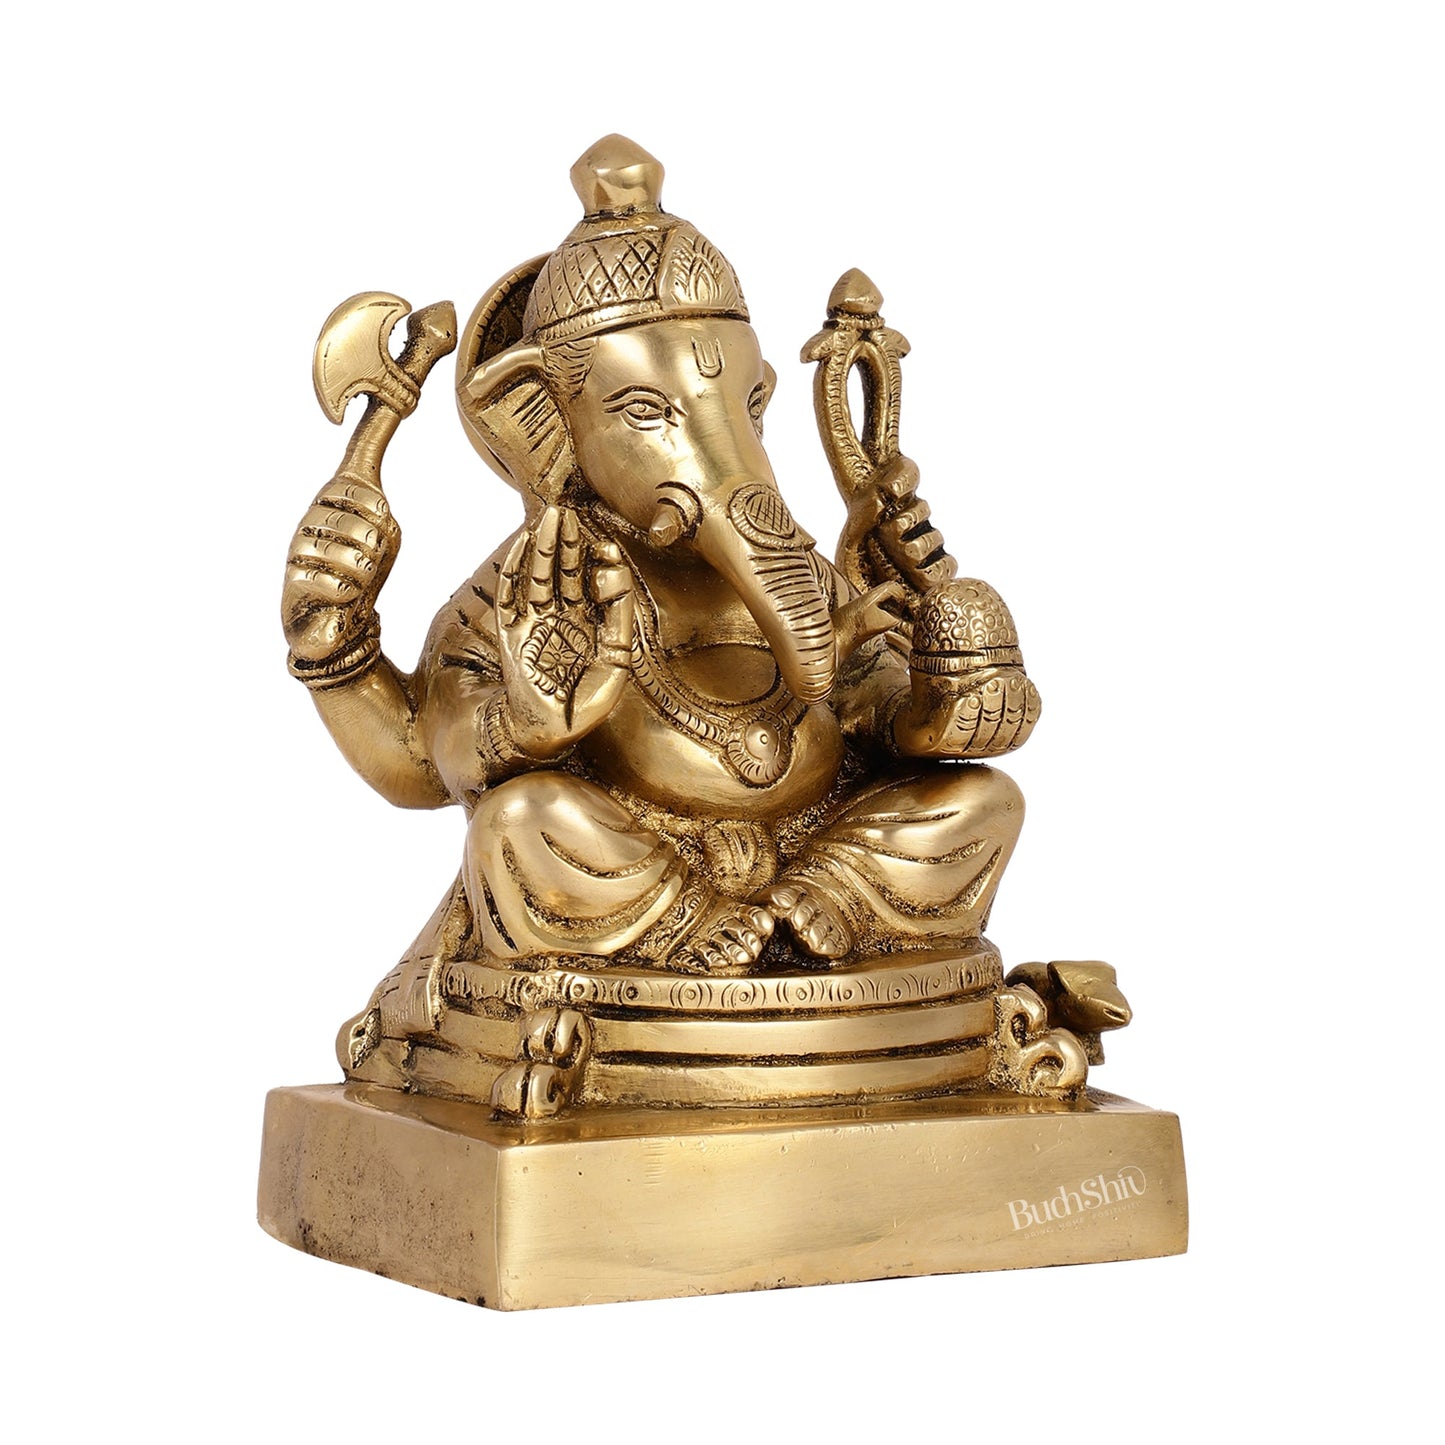 Fine Quality Brass Lord Ganesha Idol | 7.5" Height - Budhshiv.com